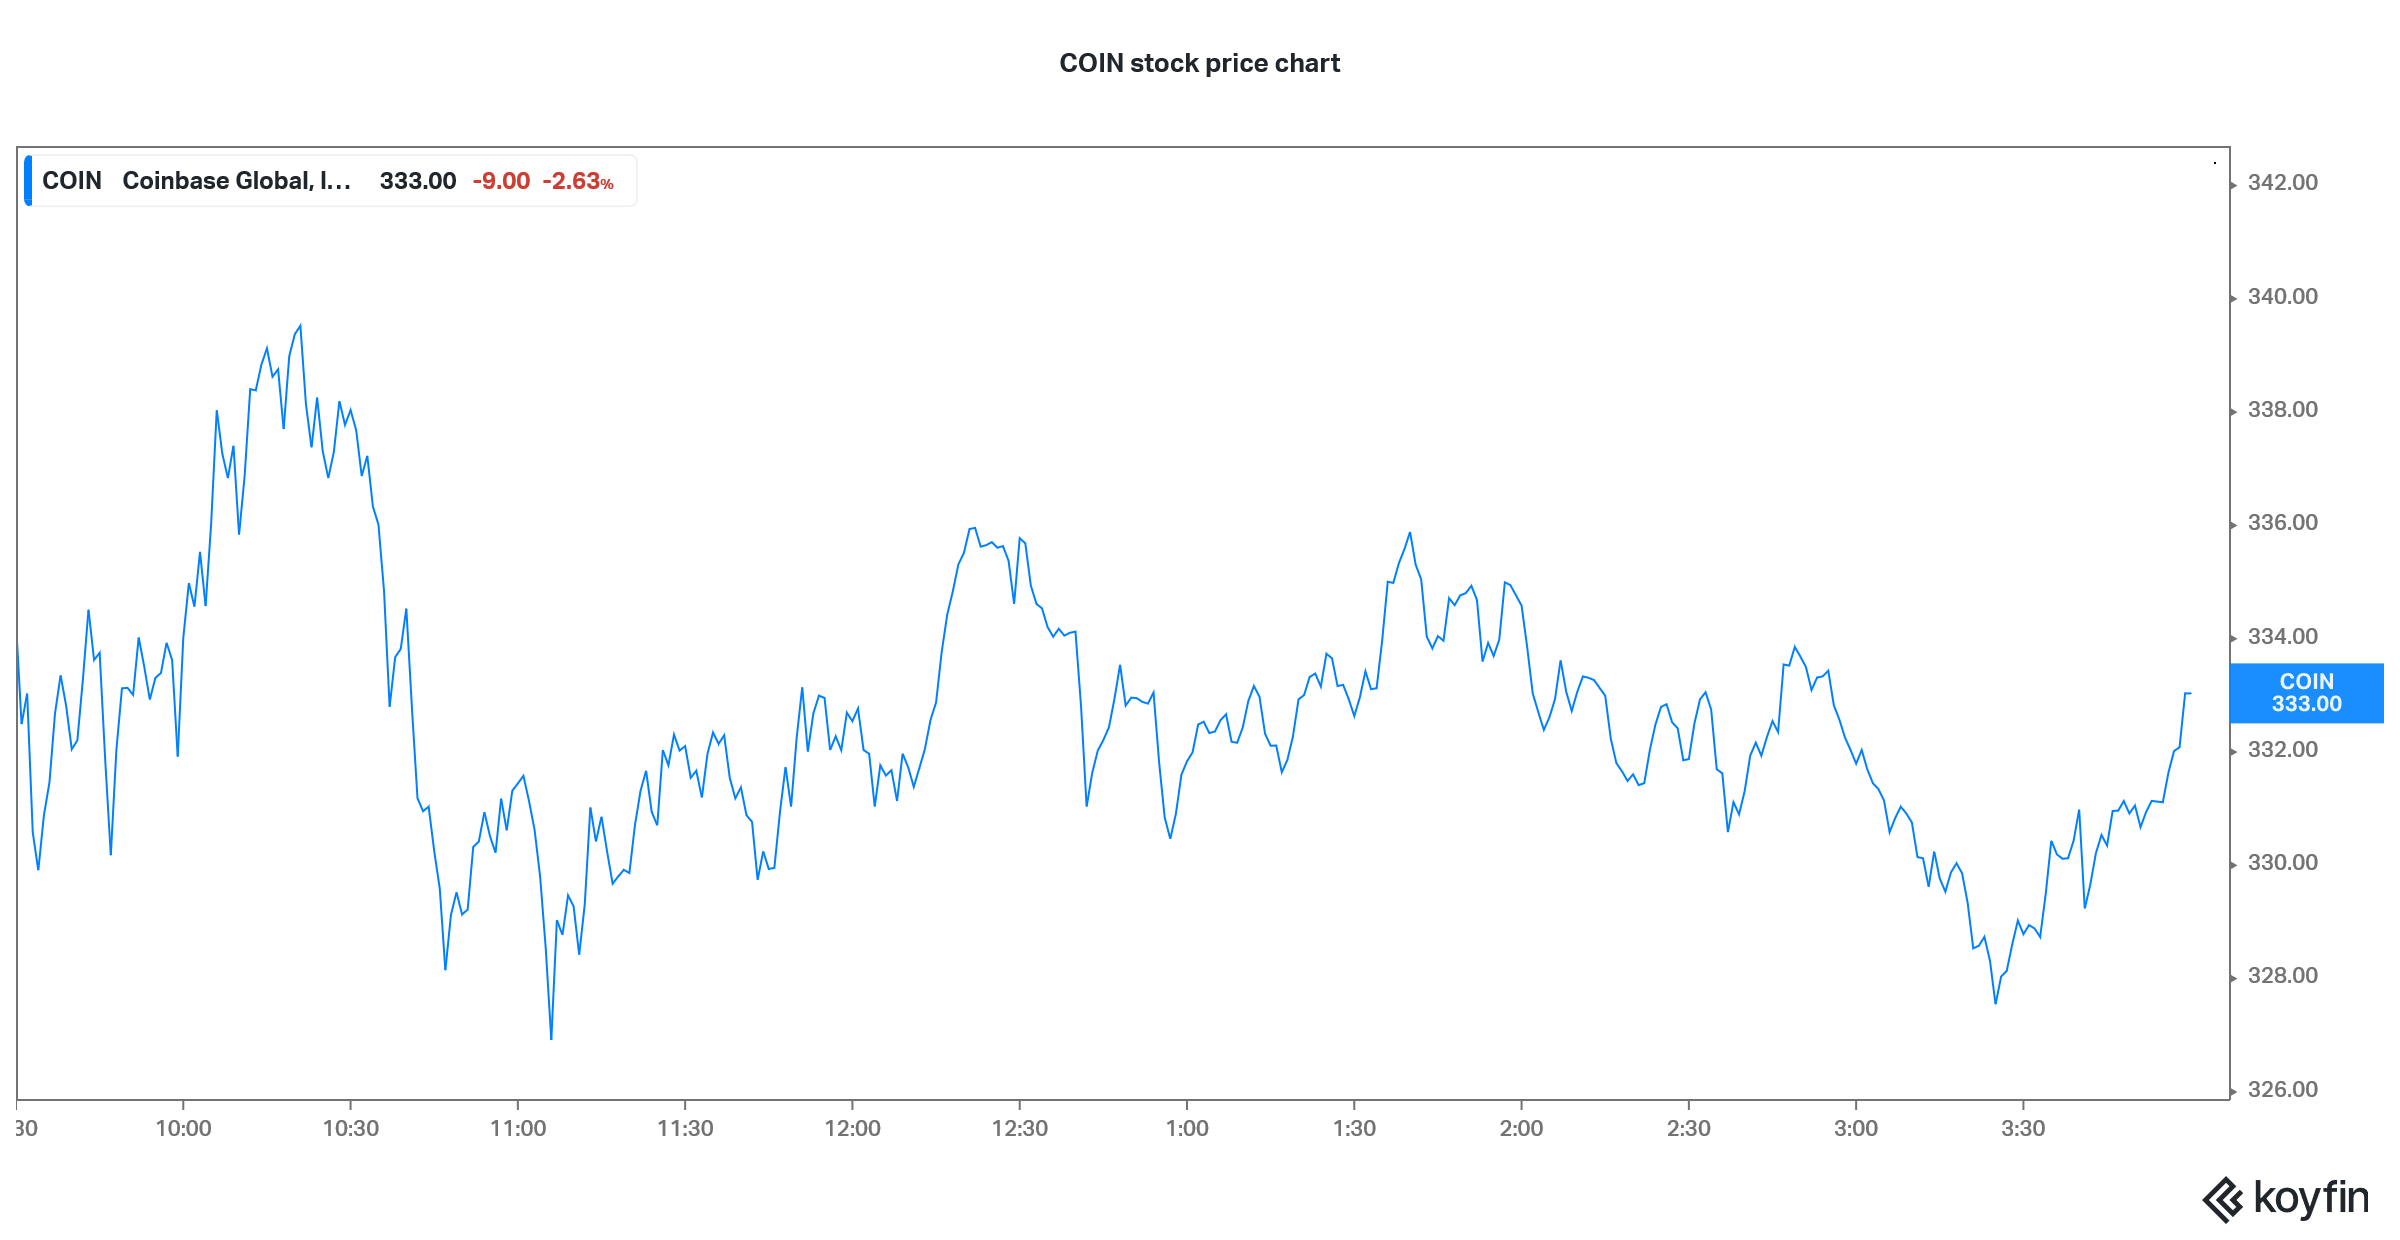 coinbase stock price forecast 2025